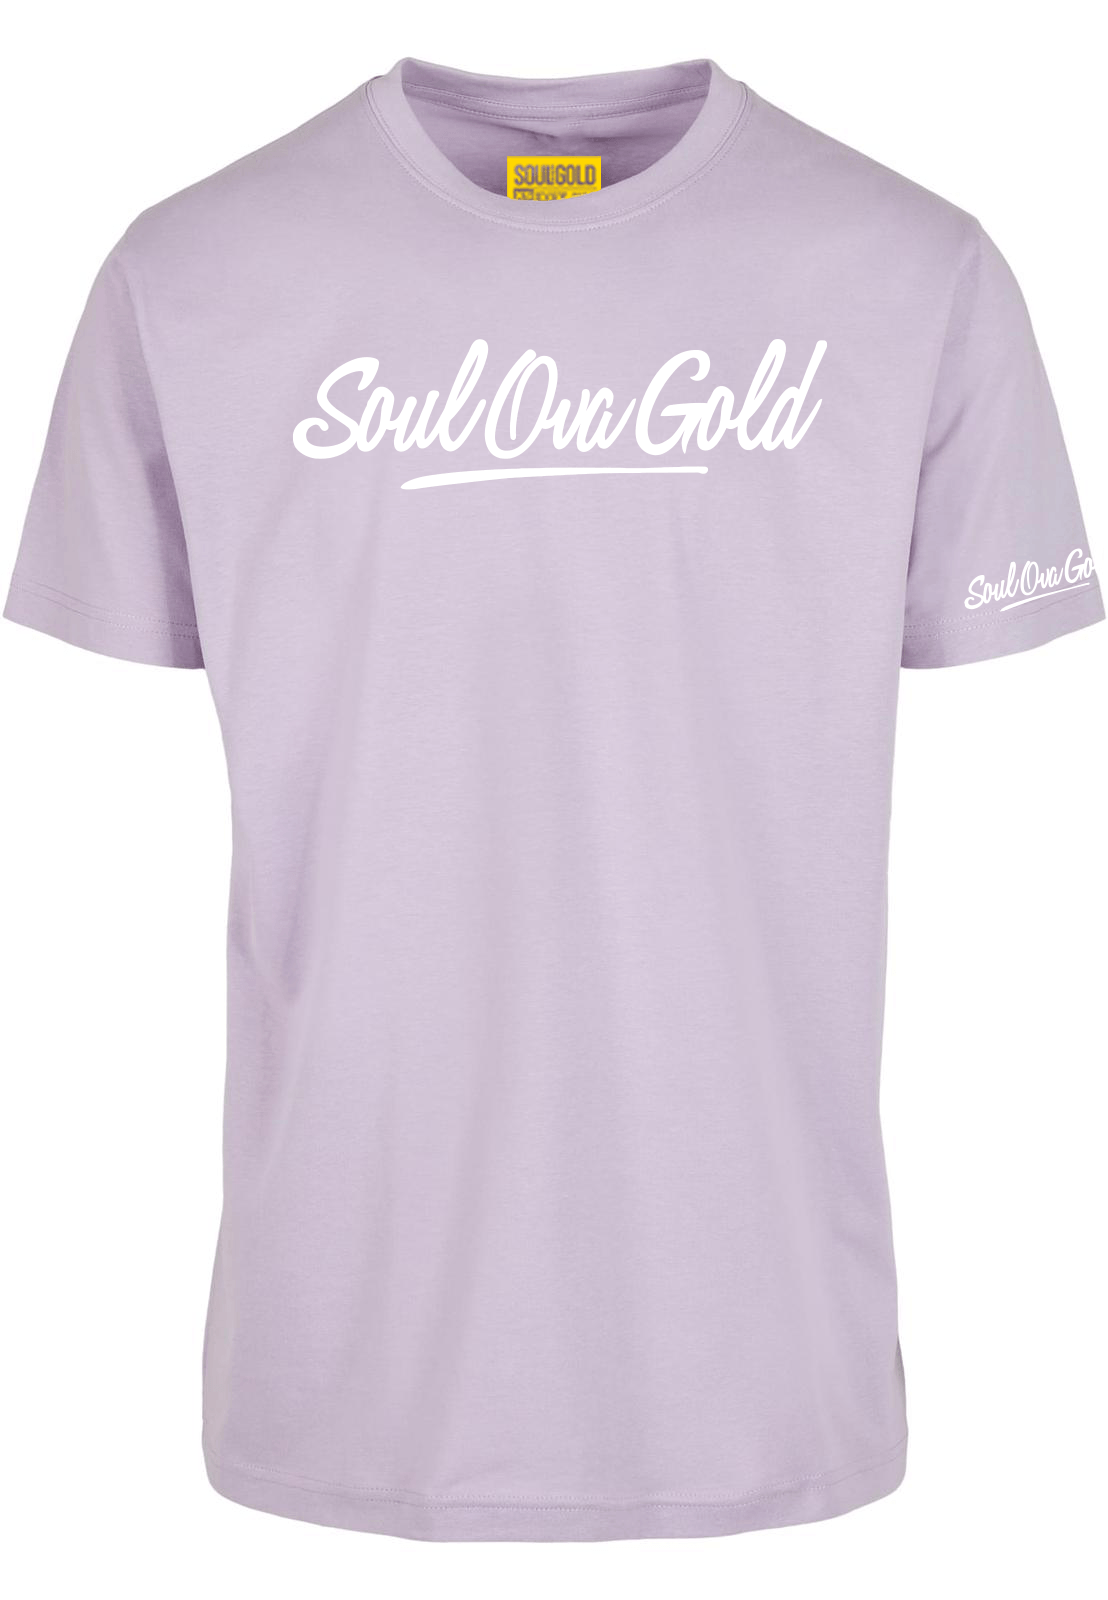 Soul Ova Gold Men's Tees Stick 2 The Script Classic fit T-Shirt (Lilac)